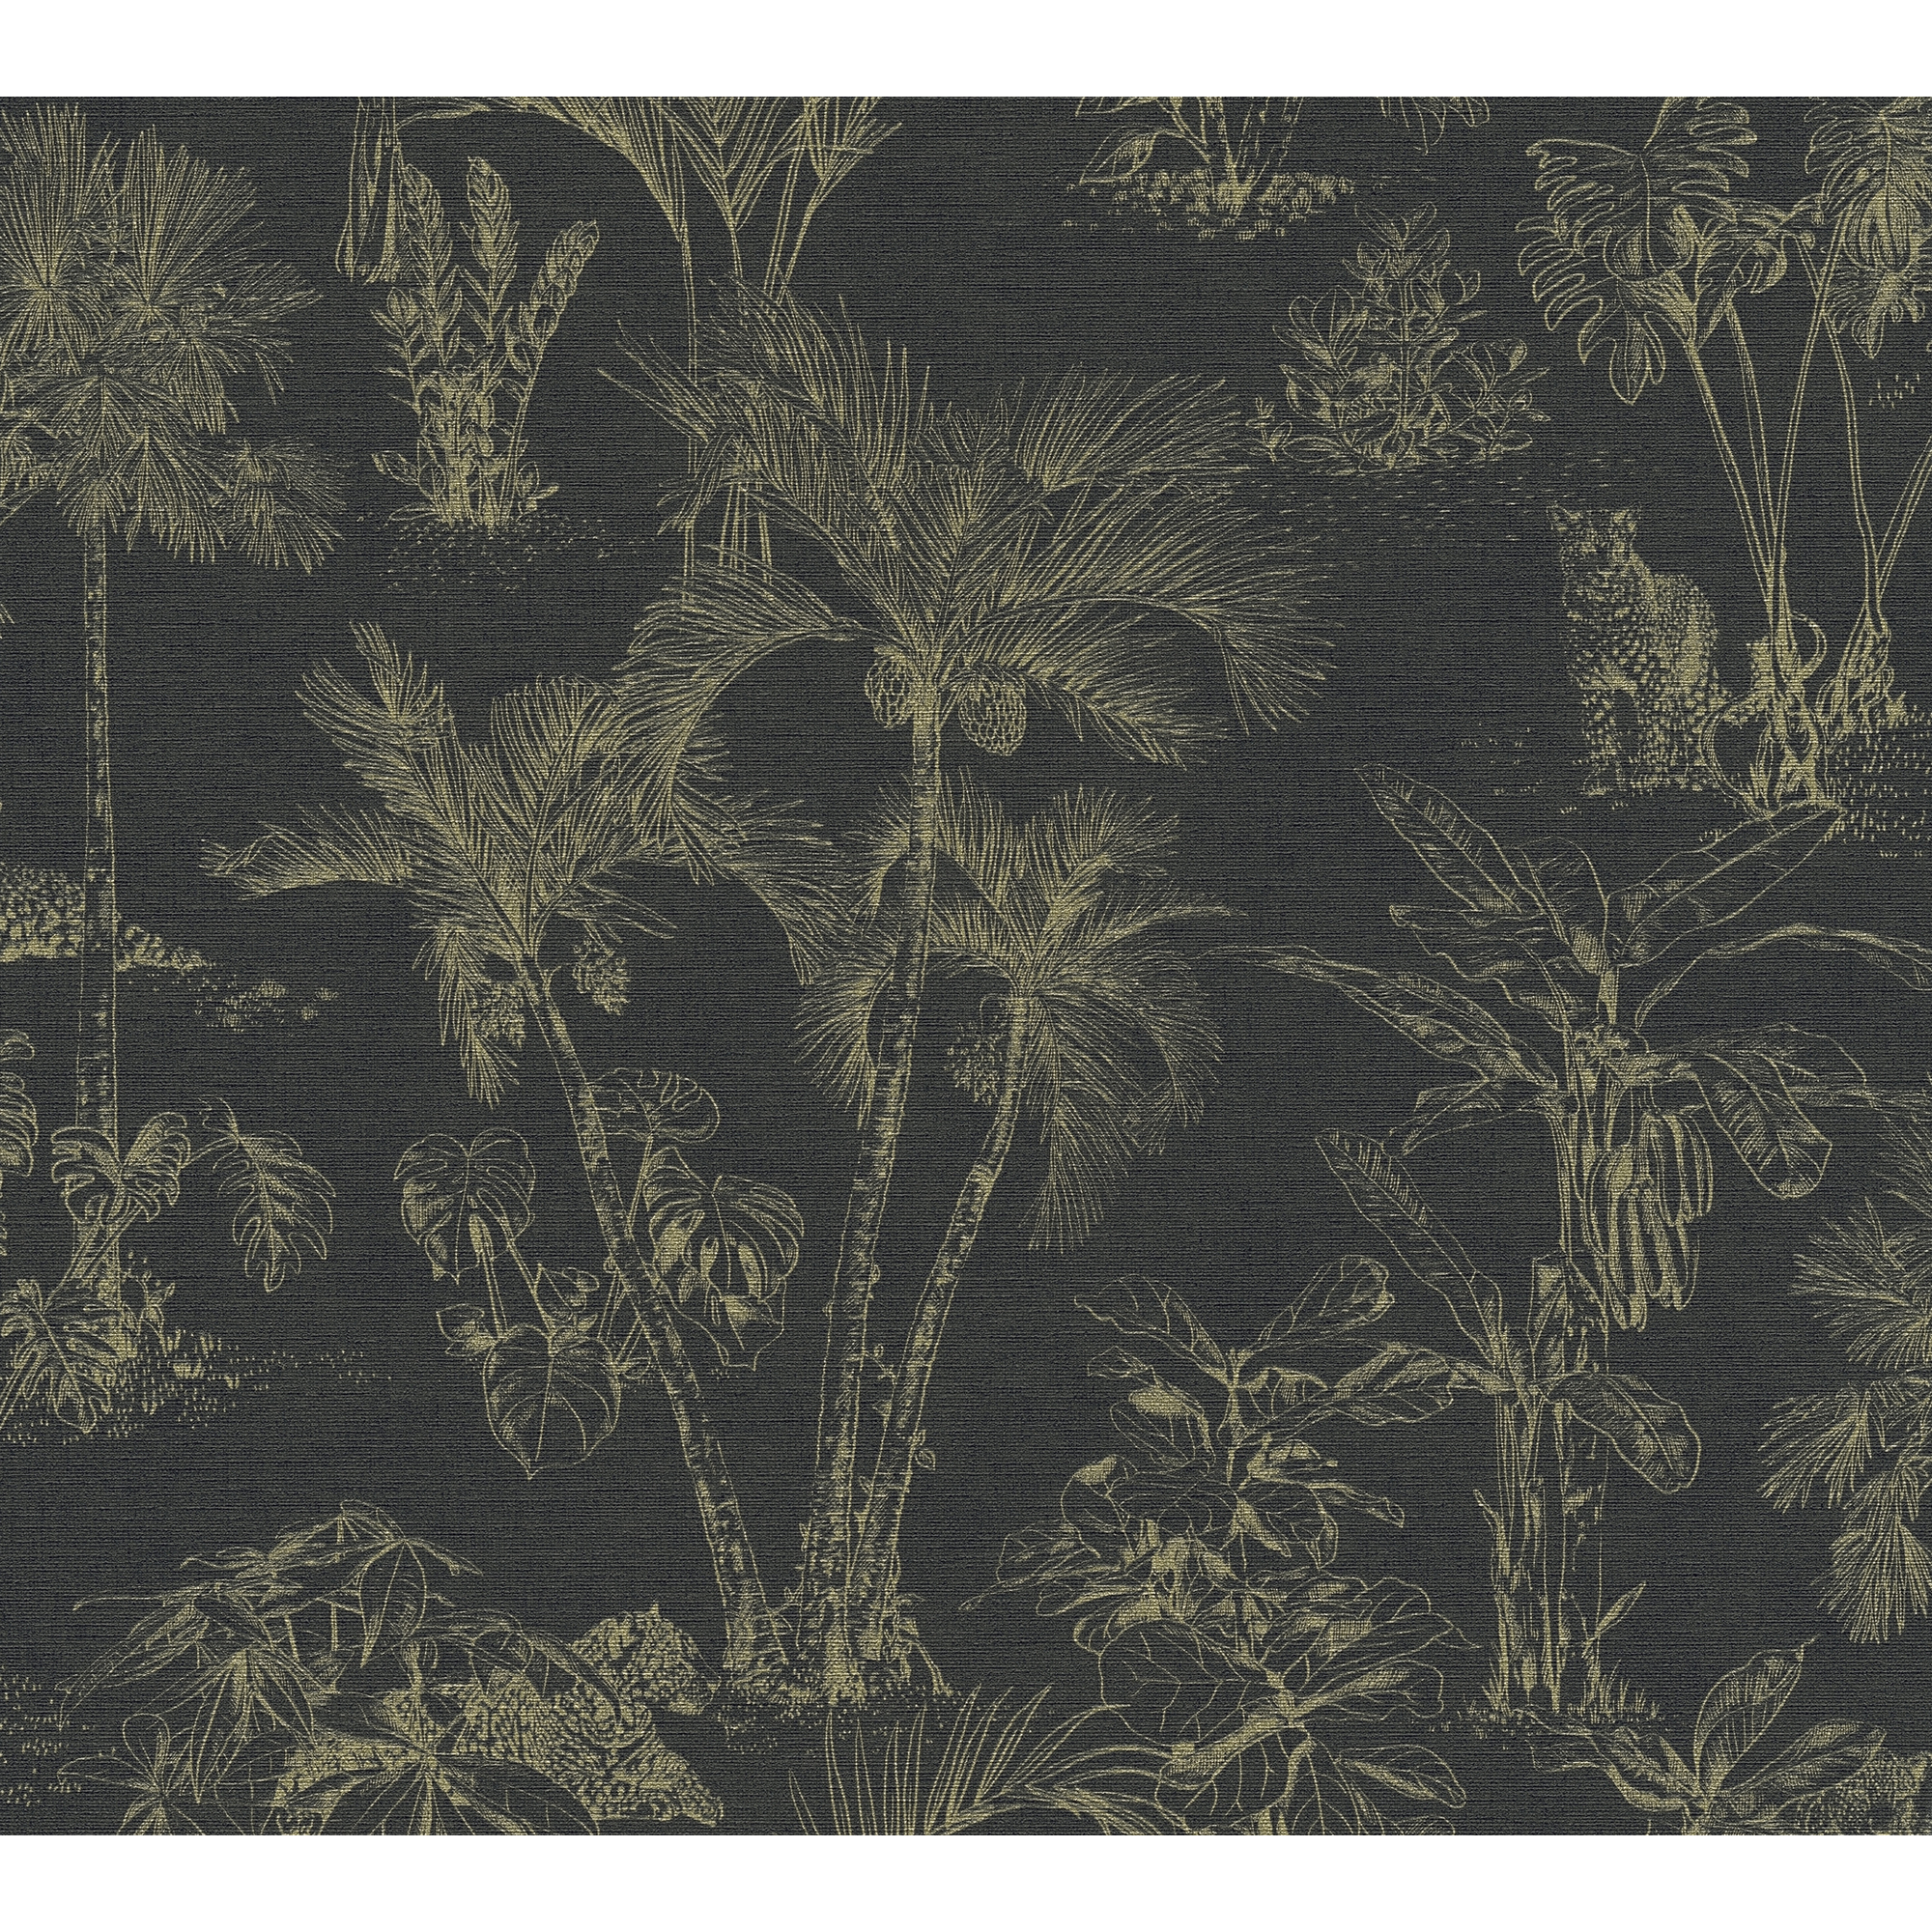 Vliestapete 'Cuba' Dschungel schwarz-metallic 10,05 x 0,53 m + product picture